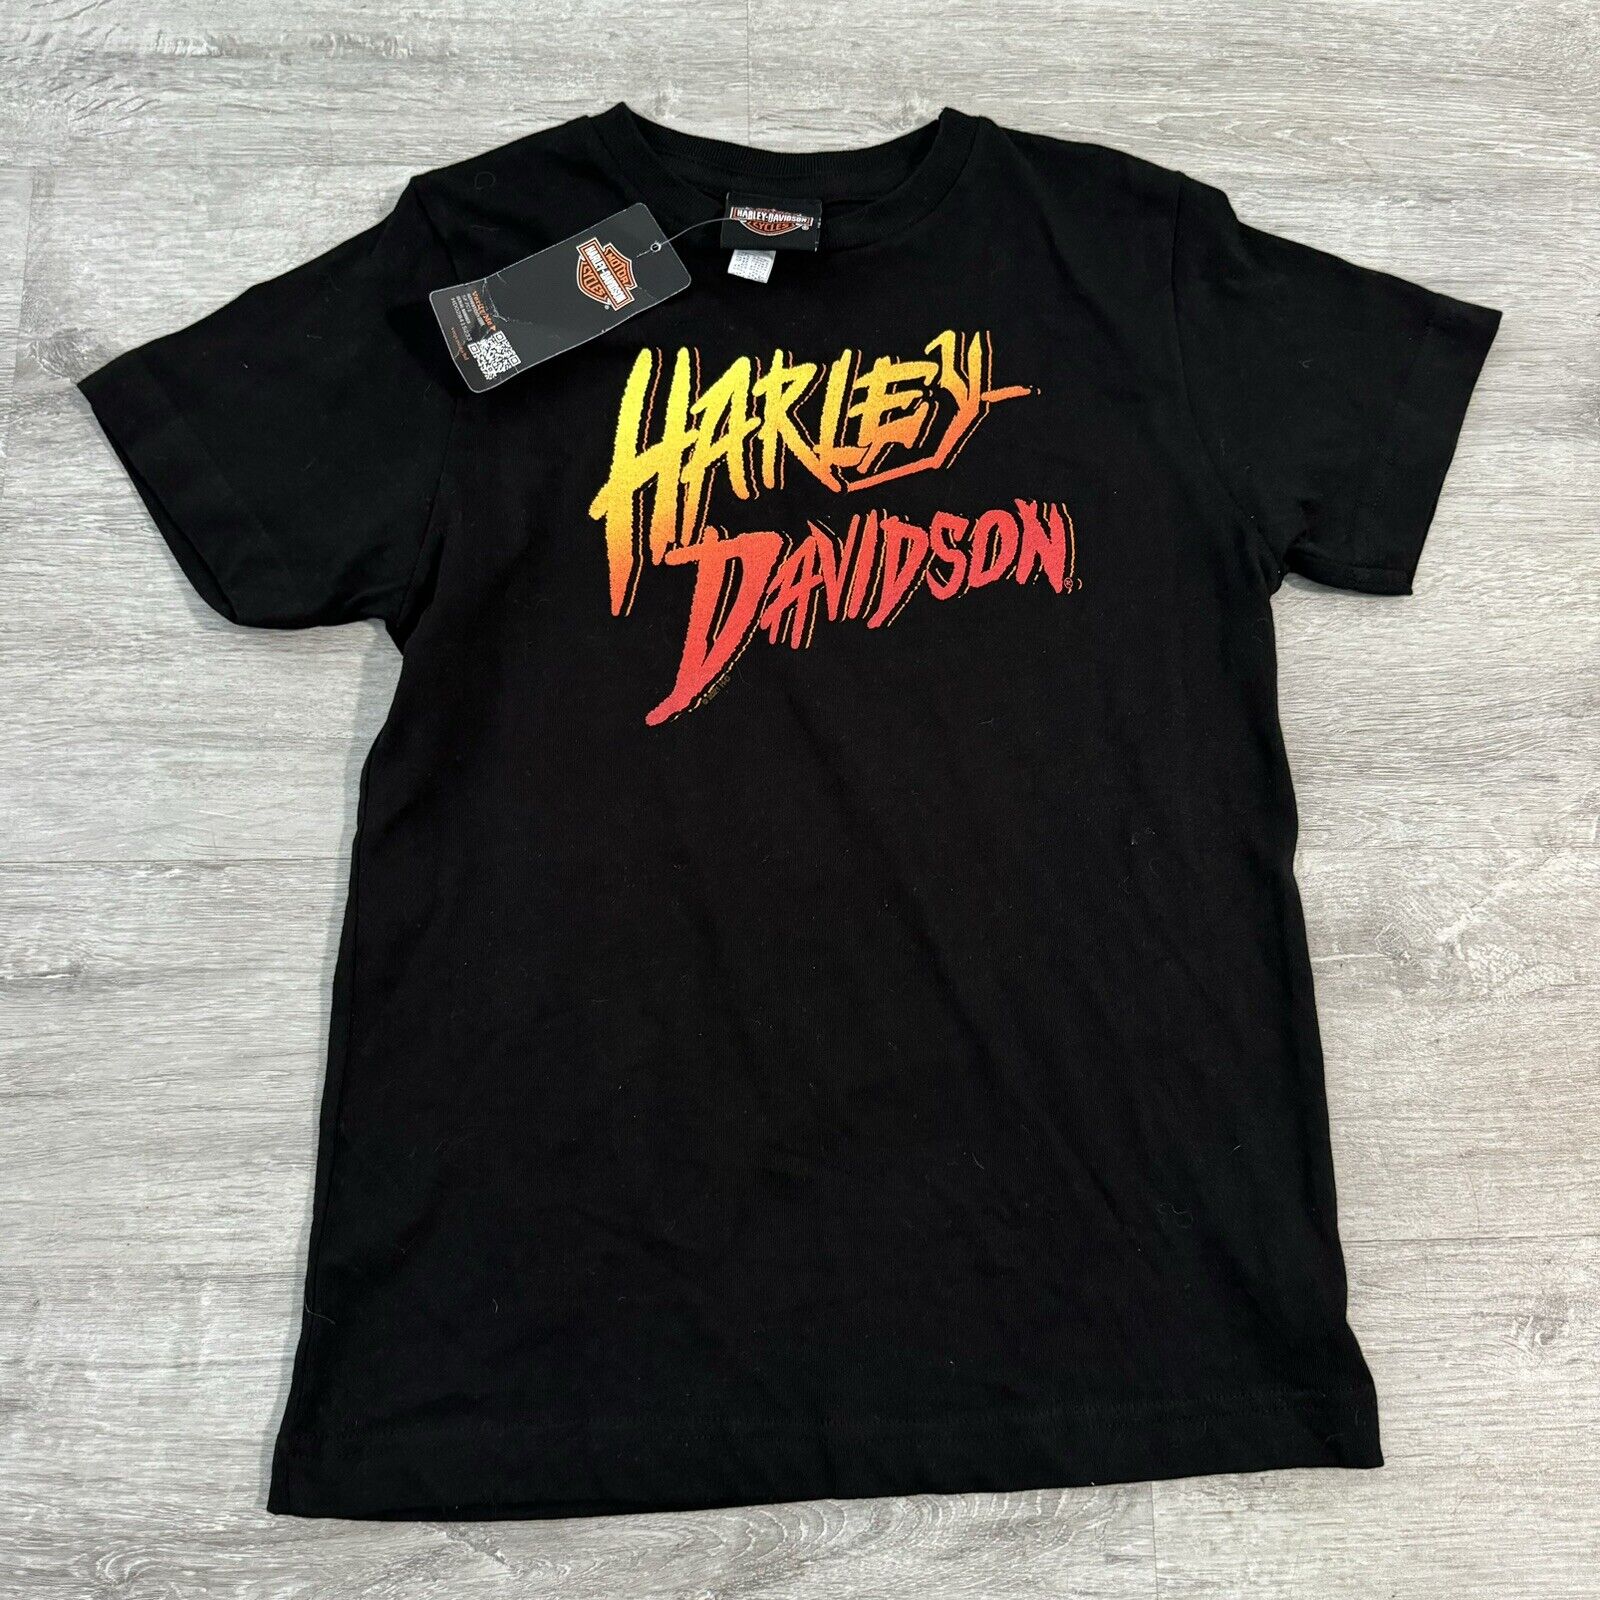 NWT Harley Davidson Youth Small Tee Shirt Fire Text Orlando Florida Black Shirt